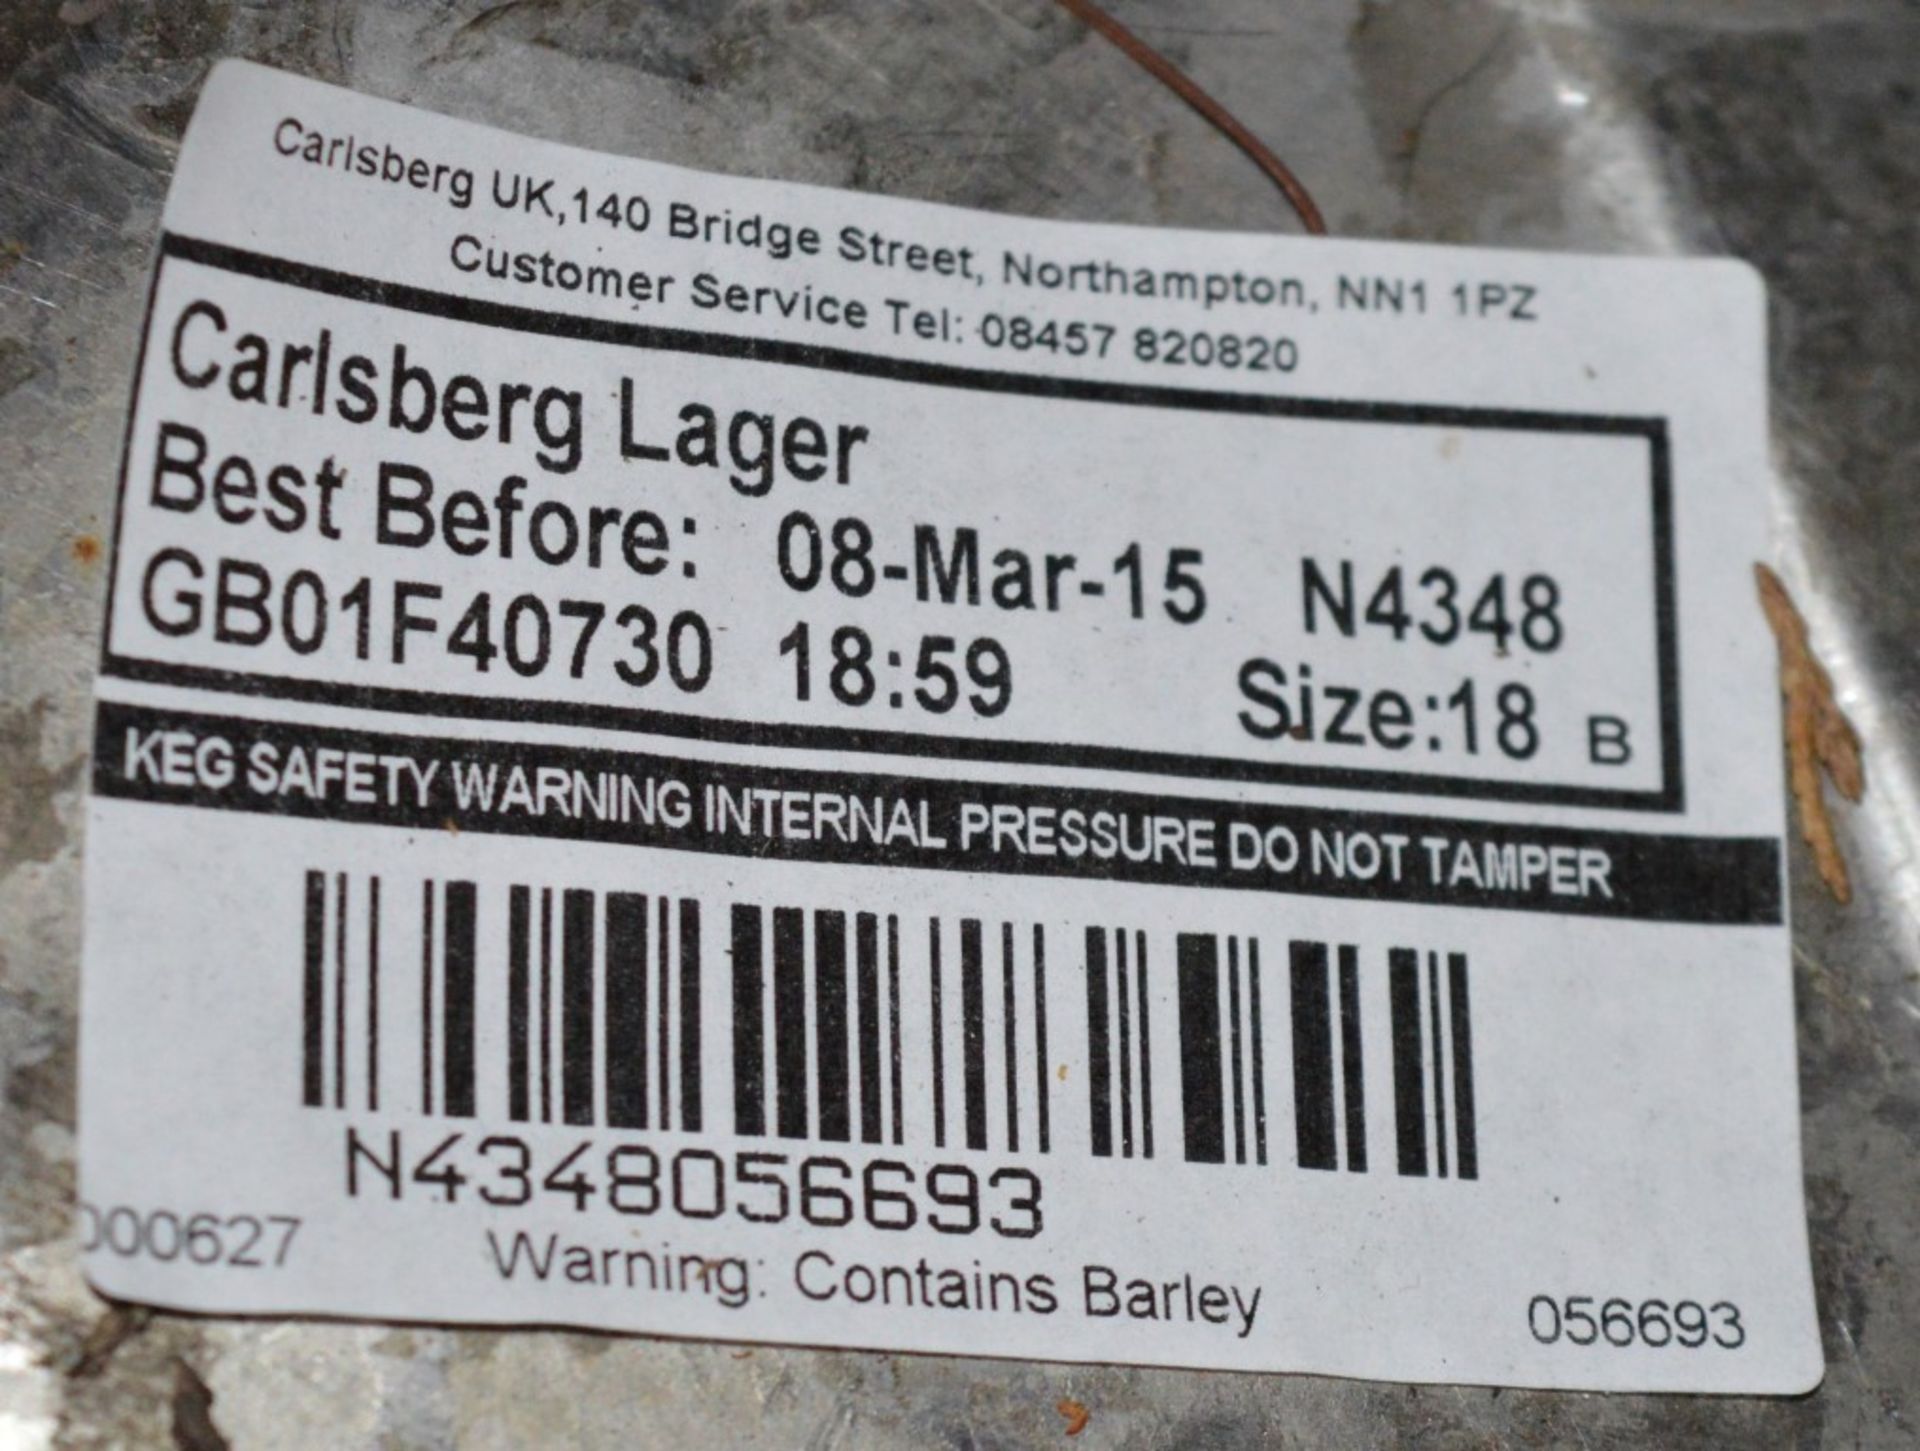 1 x Beer Keg CARLSBERG LAGER - Full Unused Keg - Best Before 15 March 2015 - See Images For - Image 3 of 3